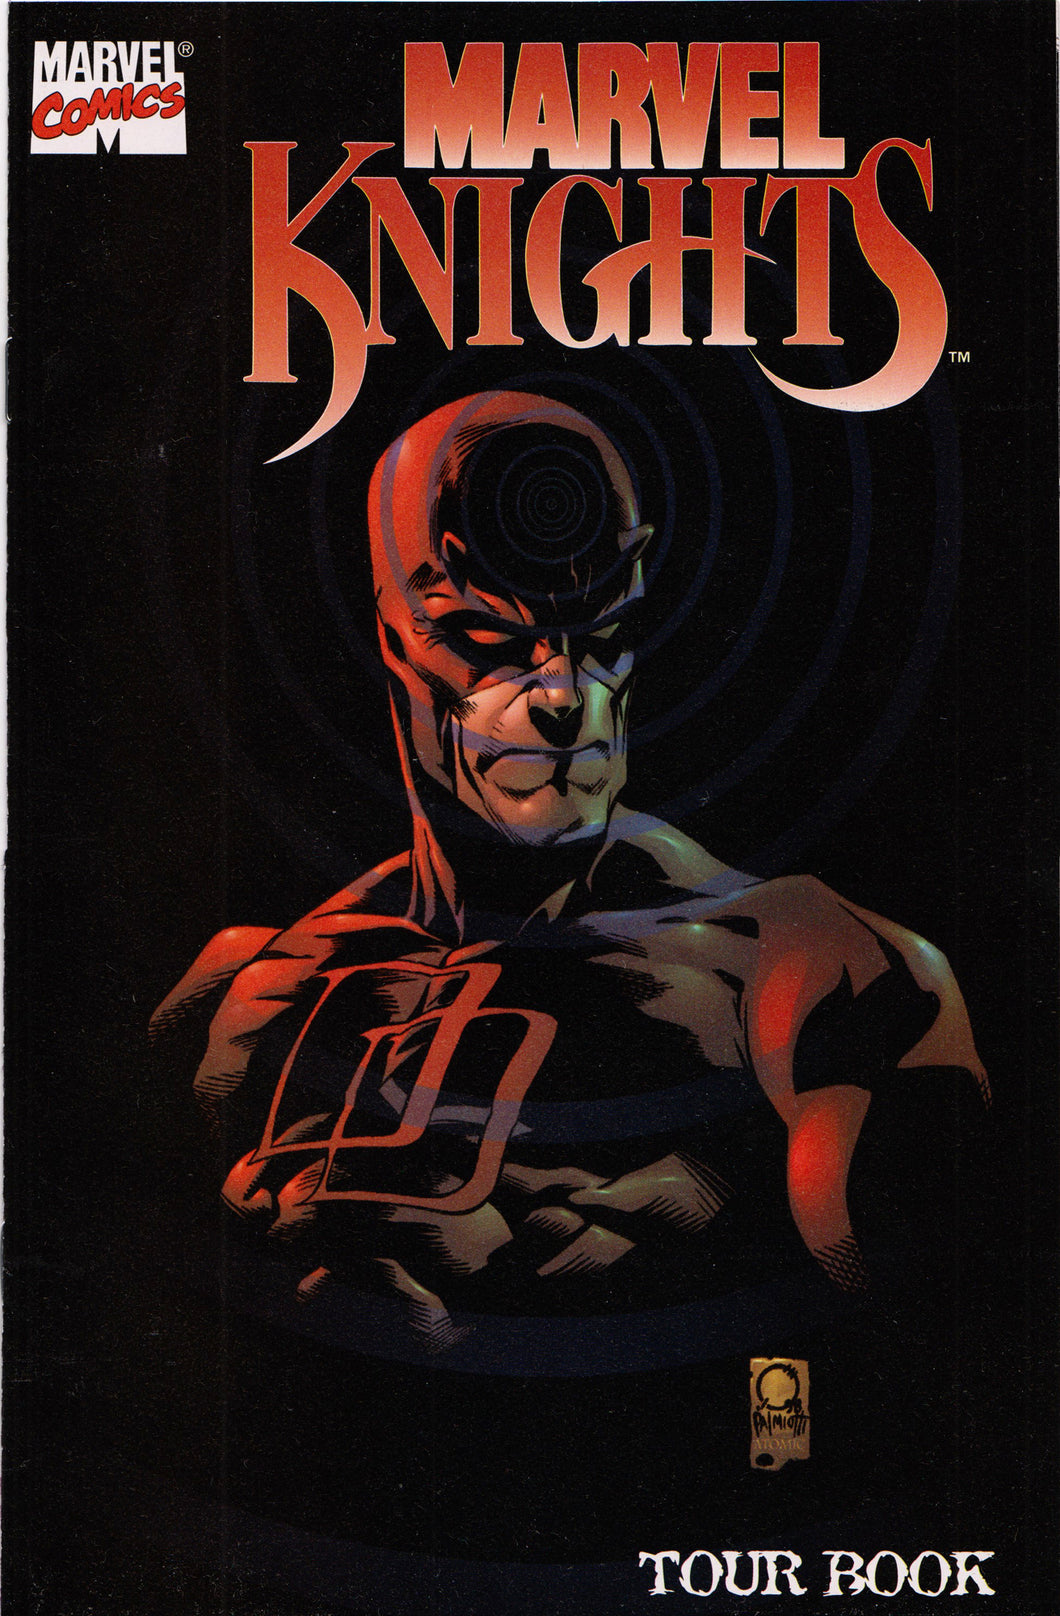 MARVEL KNIGHTS TOUR BOOK PROMO COMIC BOOK ~ Marvel Comics